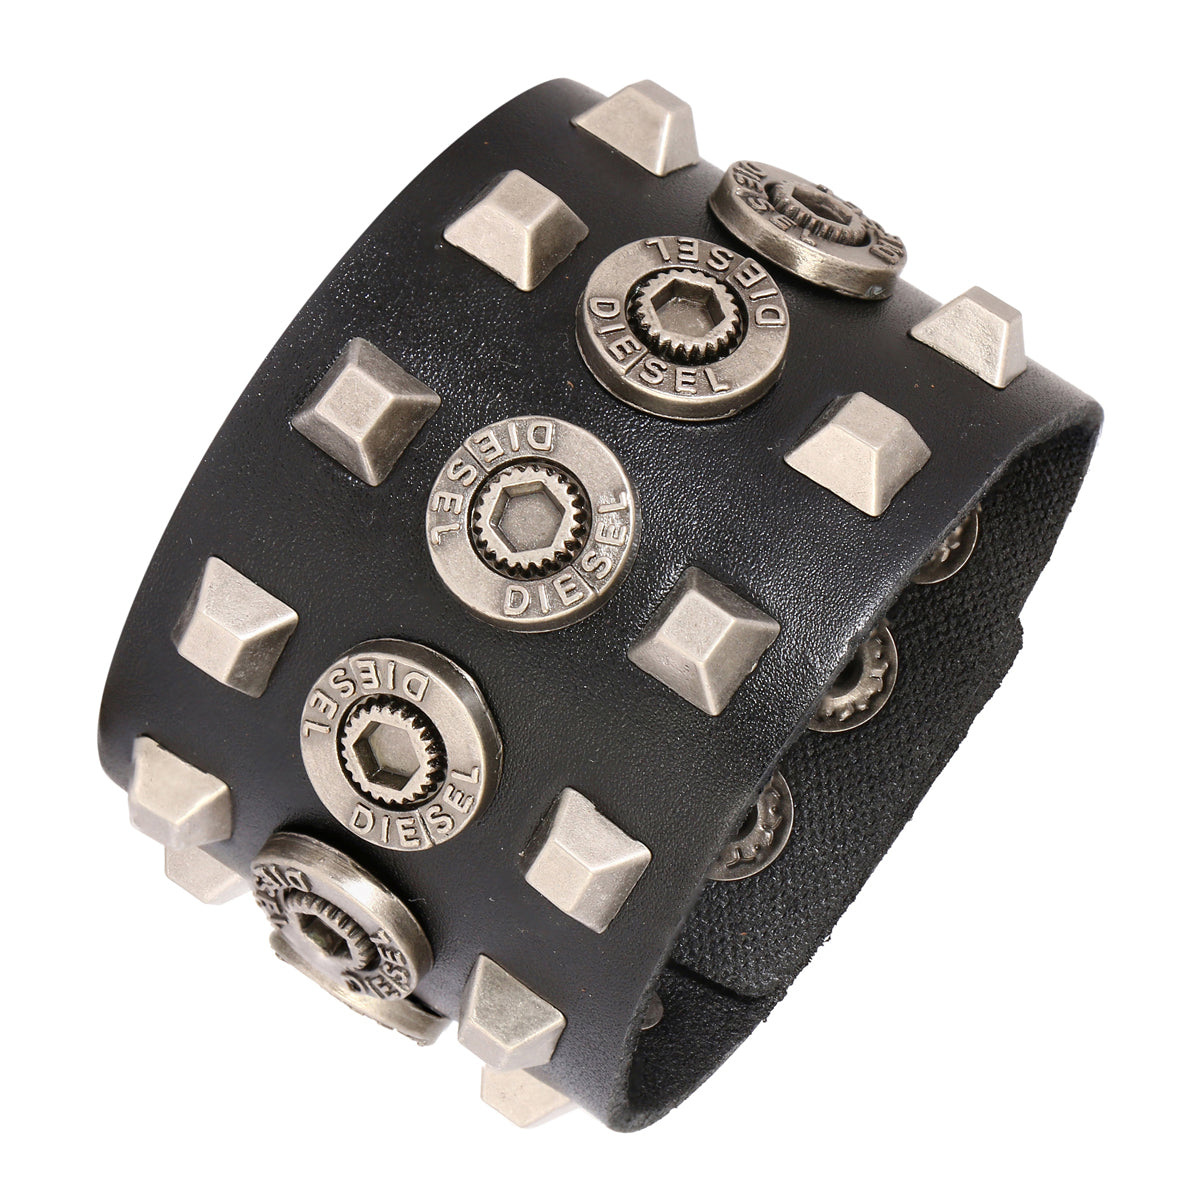 Stylish Genuine Handcrafted Black Leather Bracelet For Men